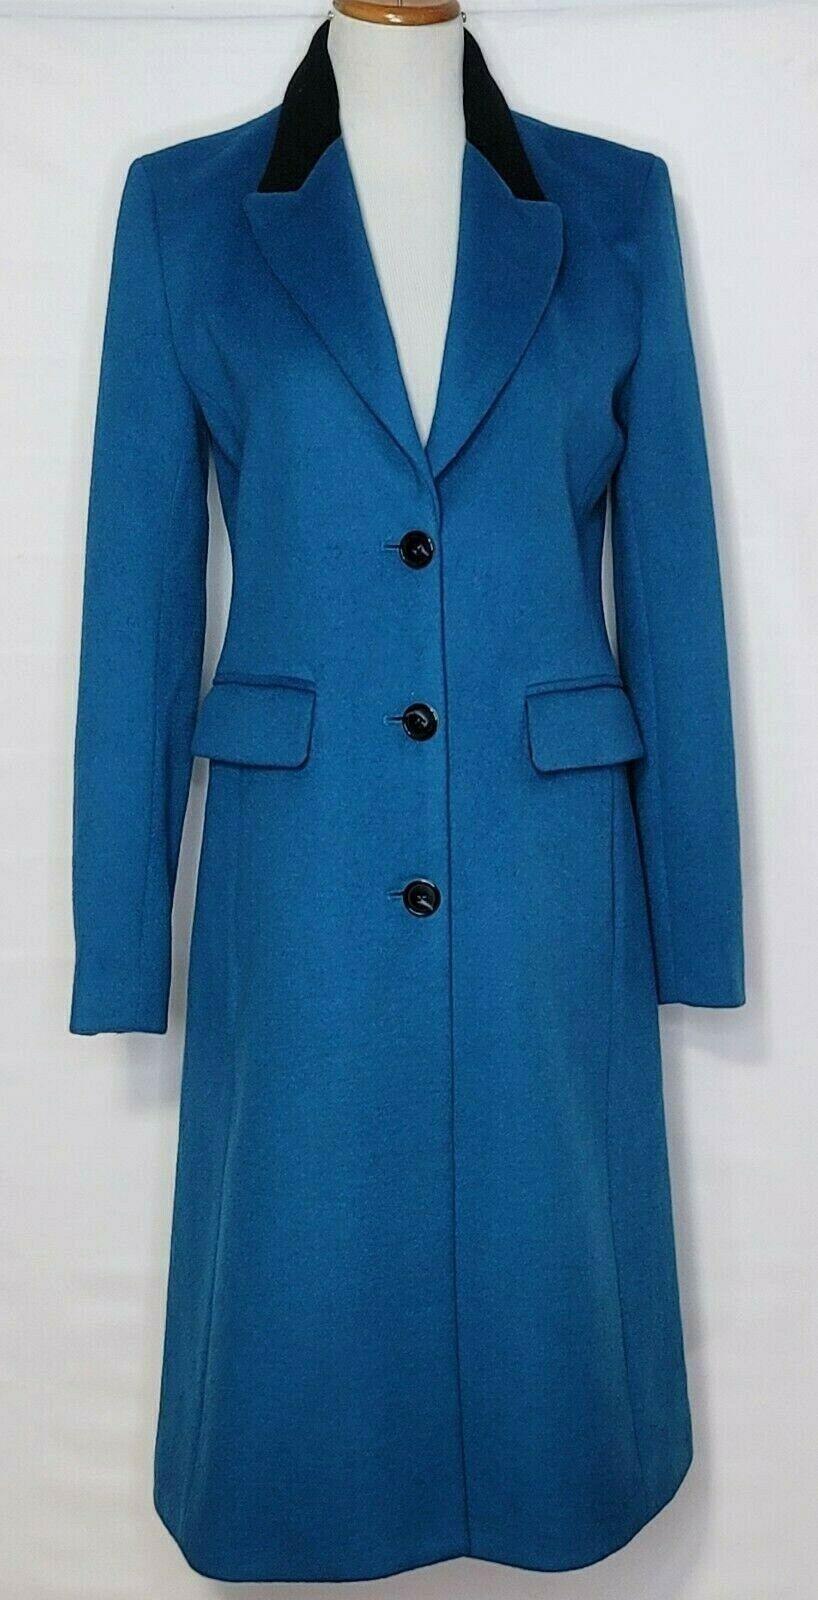 Karl Lagerfeld Women's Classic Elegant Coat Blue Wool Bland Coat Size S - SVNYFancy